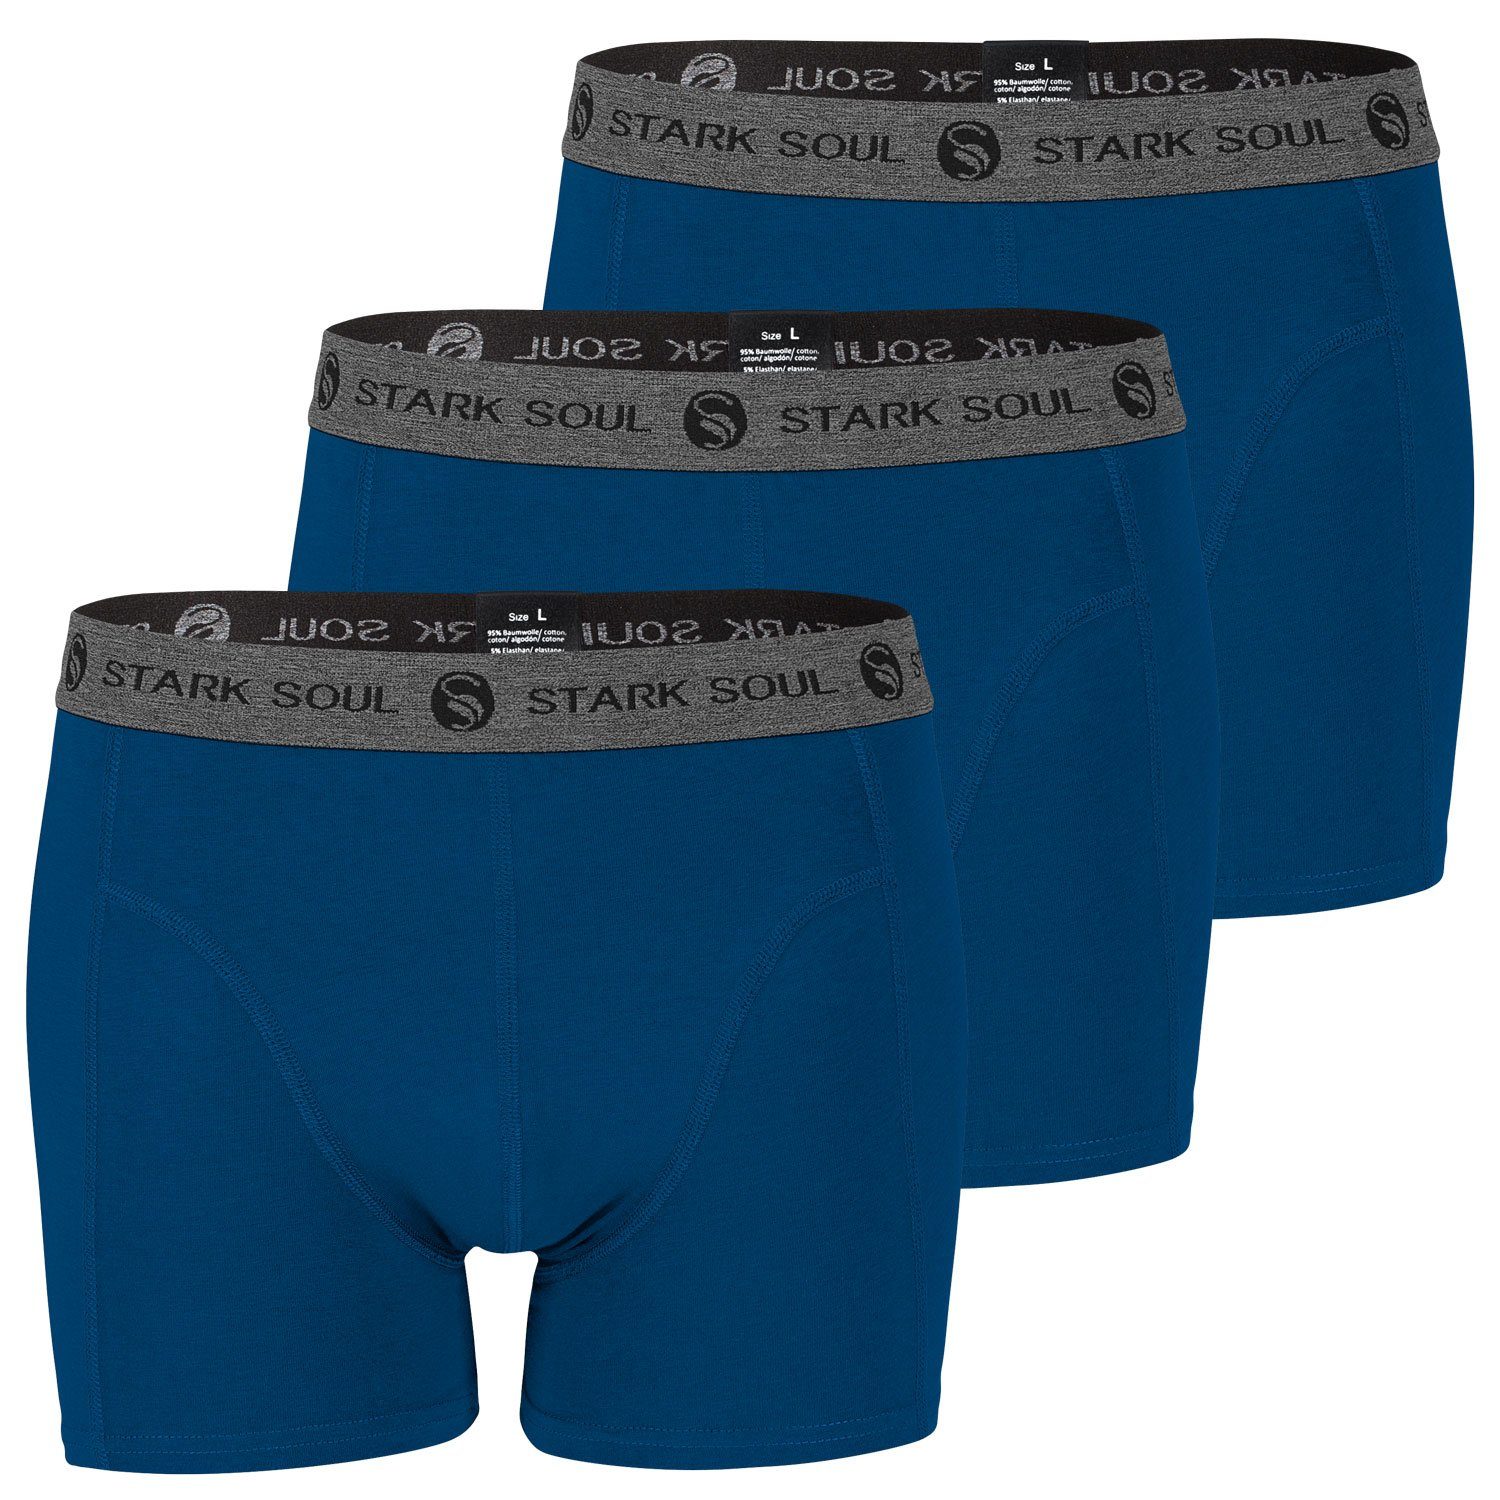 Stark Soul® Marineblau weiche - 3er-Pack 3er Baumwolle Boxershorts, Pack, Herren Retroshorts, Trunks Boxershorts